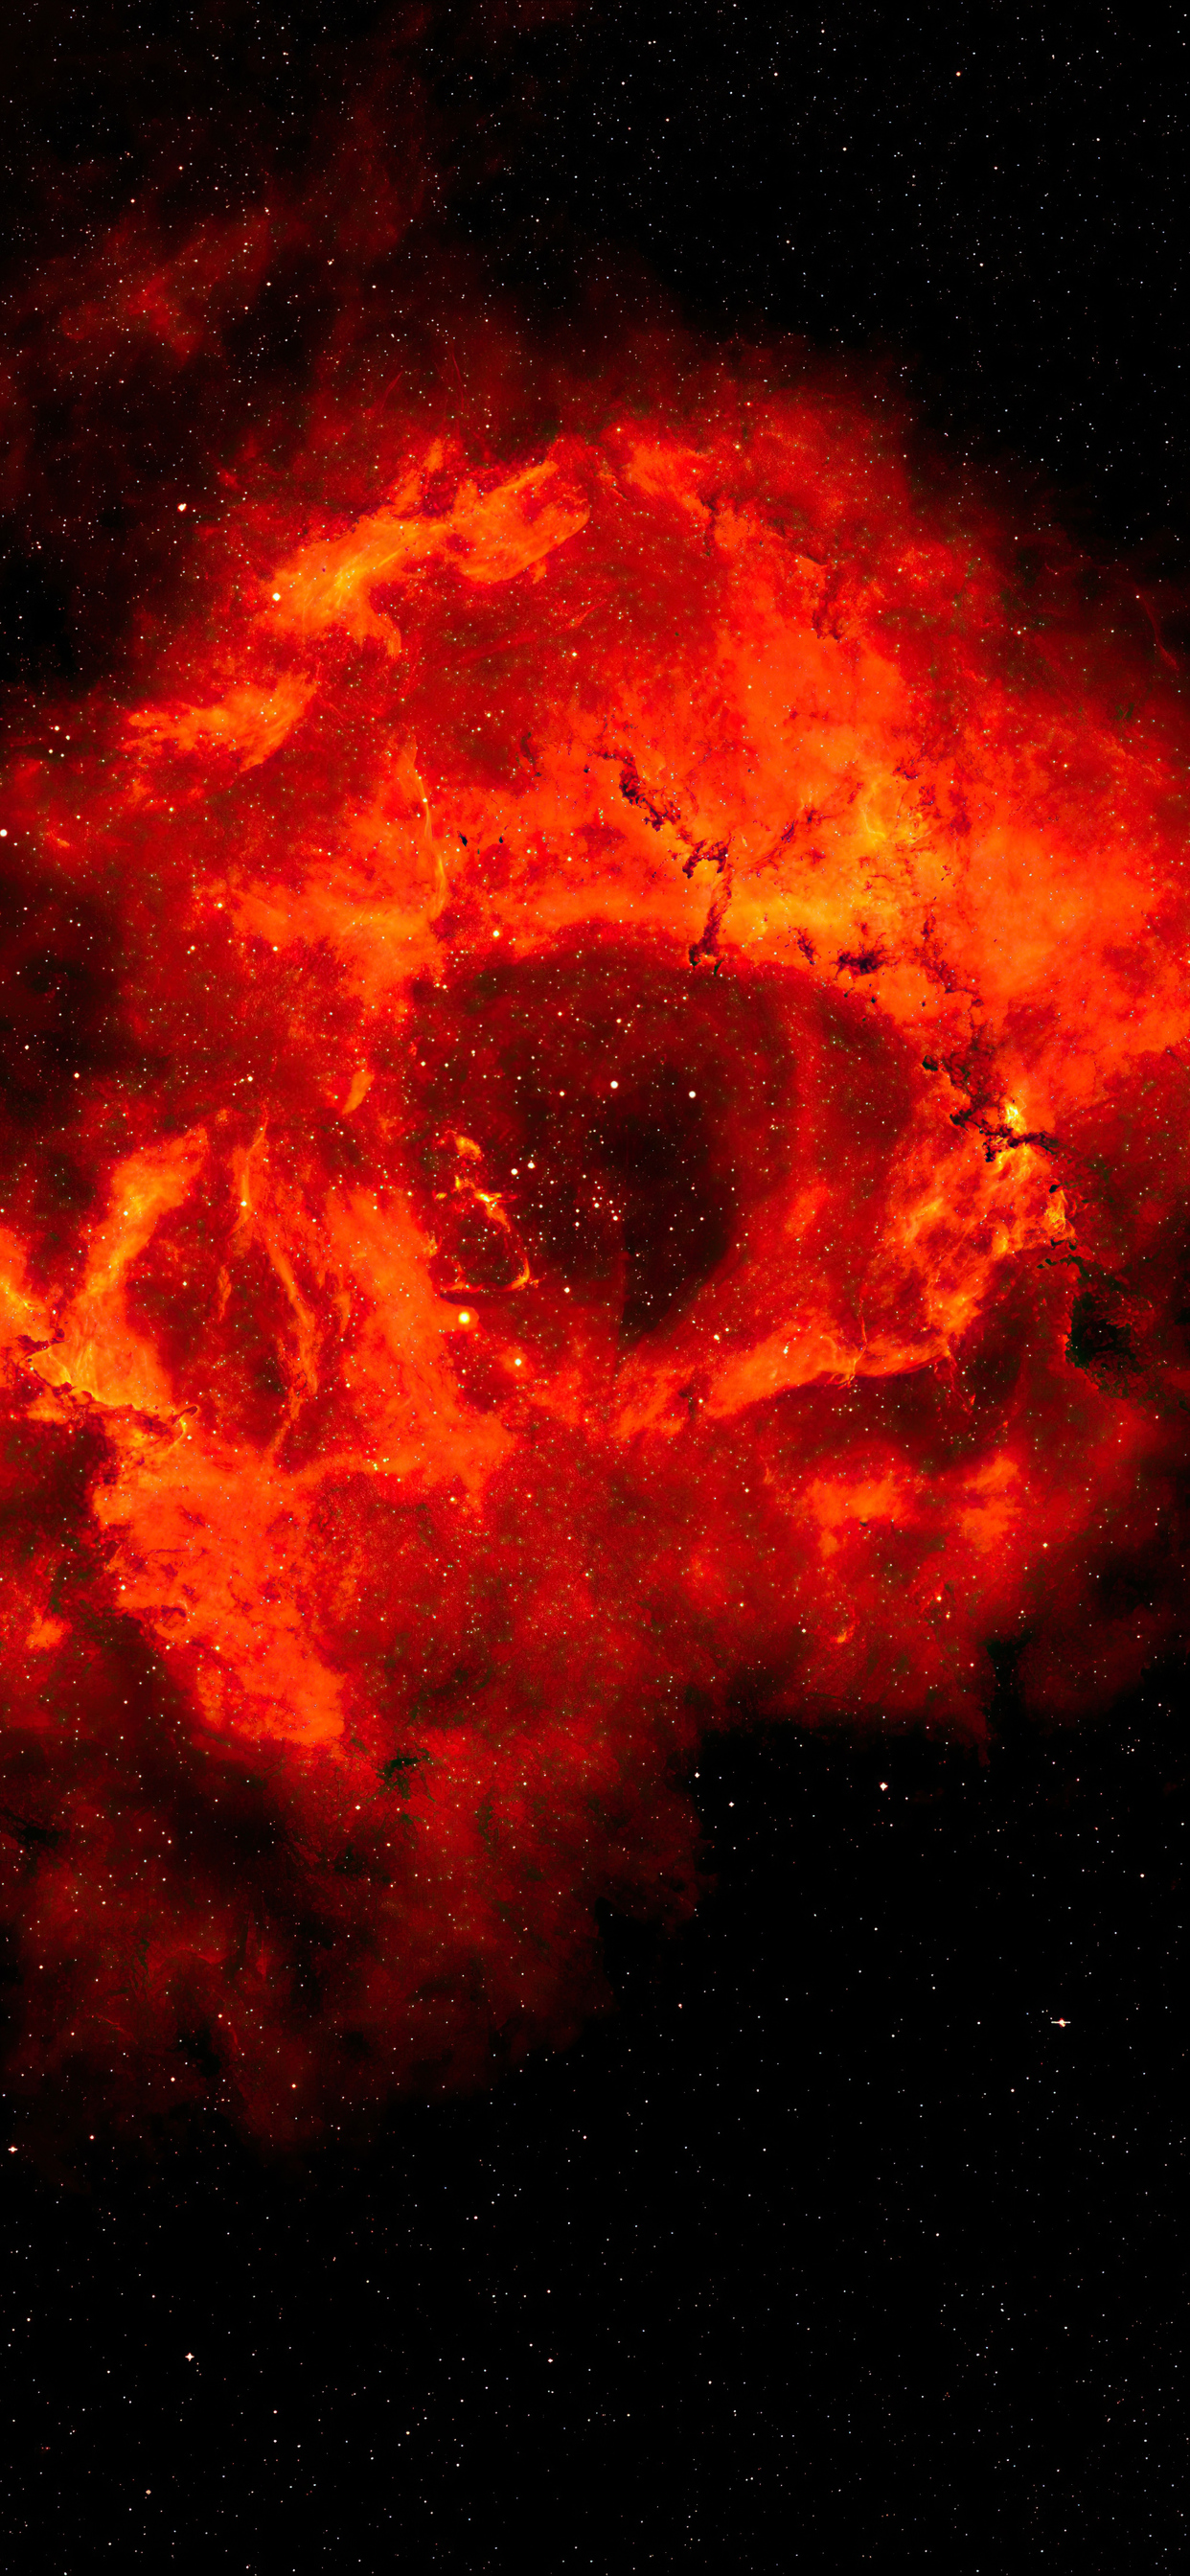 rose-nebula-4k-2m.jpg